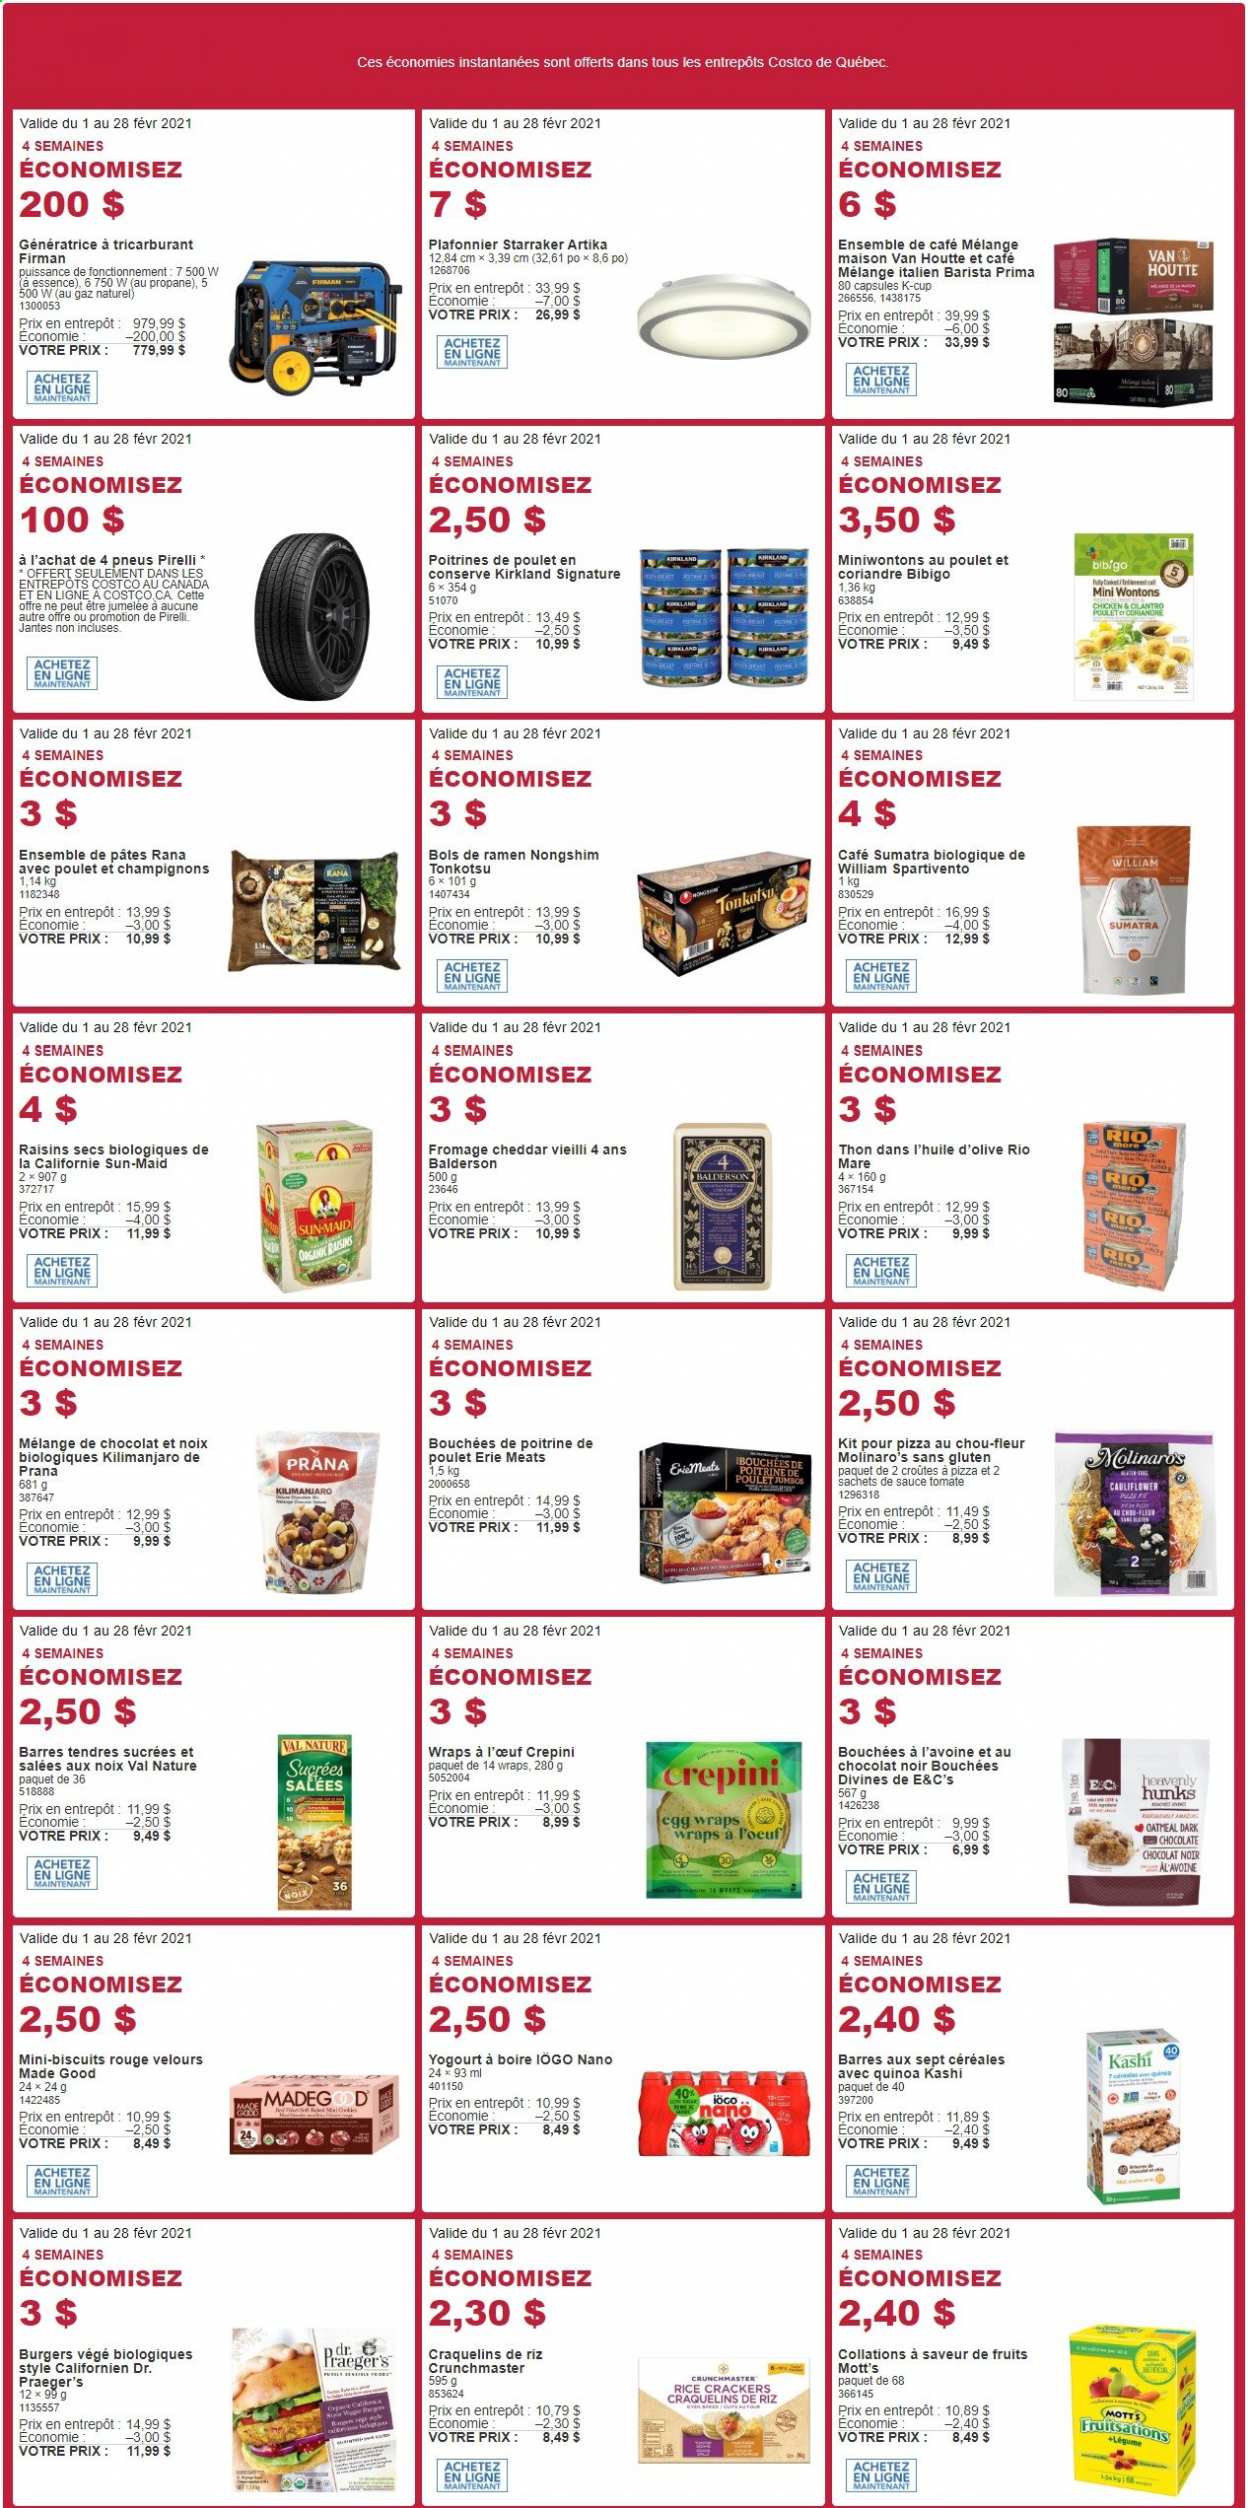 thumbnail - Costco Flyer - February 01, 2021 - February 28, 2021 - Sales products - wraps, Mott's, ramen, pizza, hamburger, sauce, Giovanni Rana, Rana, cheddar, eggs, chocolate, crackers, biscuit, dark chocolate, rice crackers, oatmeal, cilantro, dried fruit, coffee capsules, K-Cups, quinoa, raisins. Page 1.